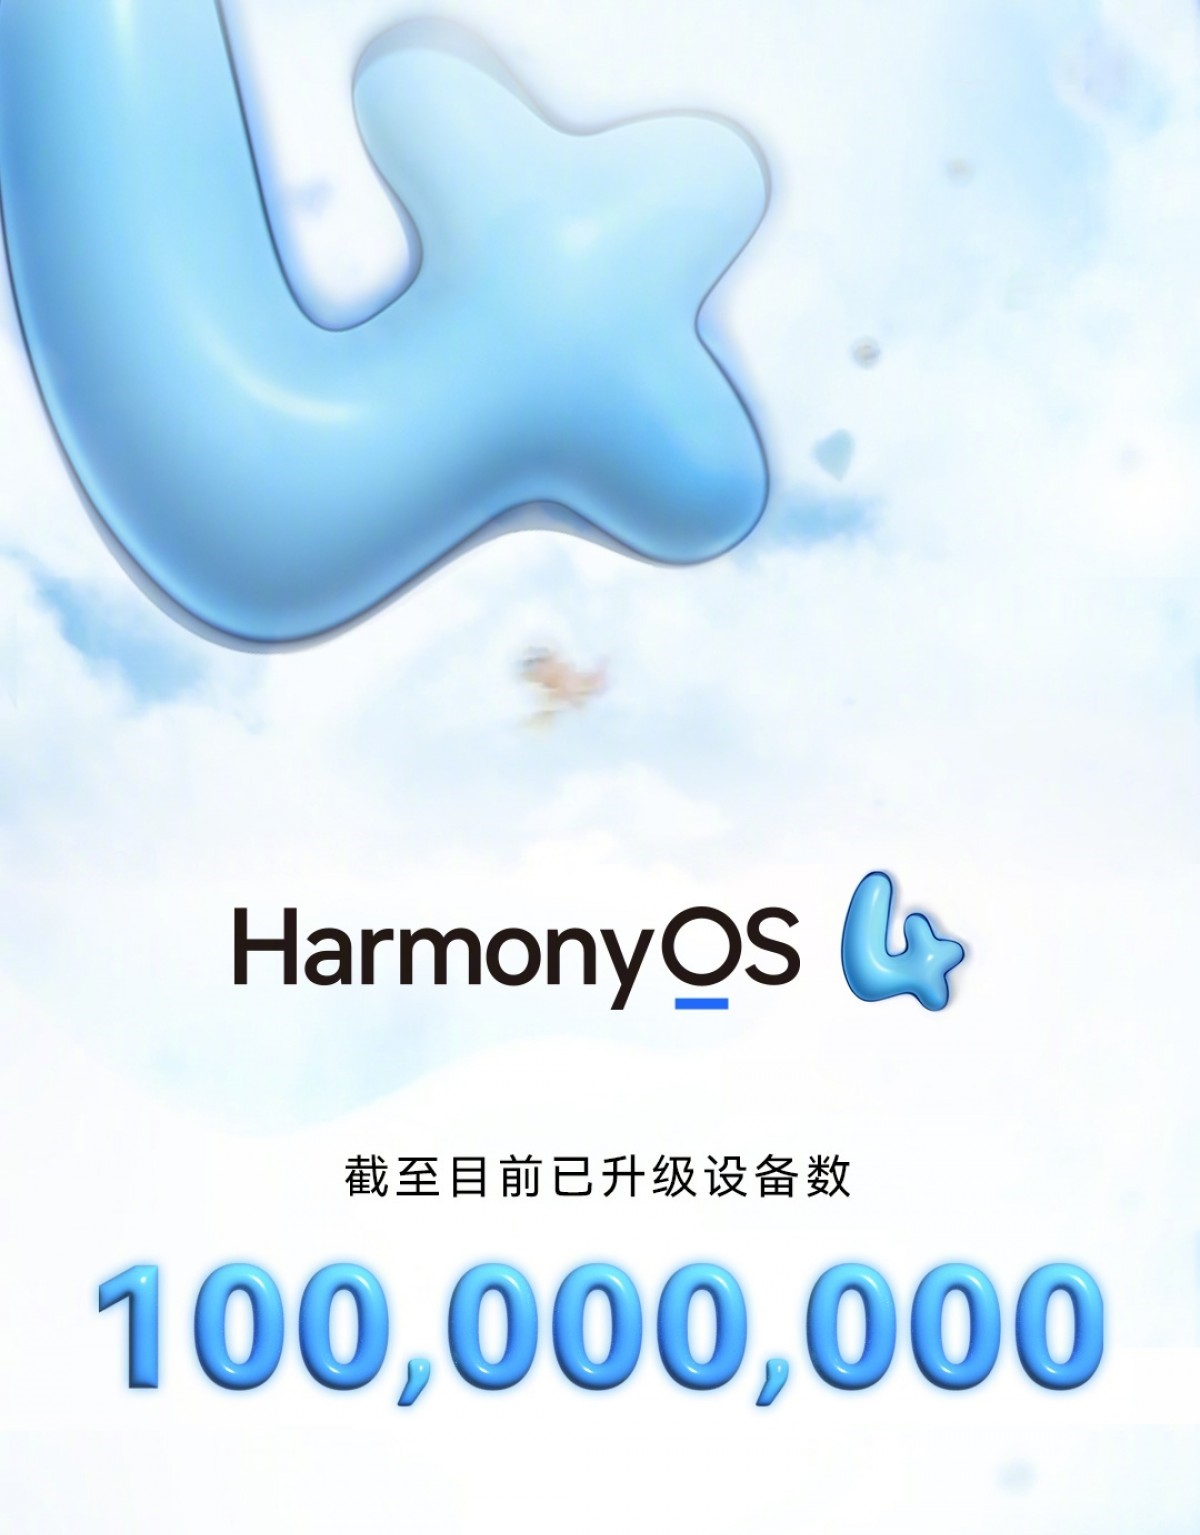 HarmonyOS 4.0, 100 milyon